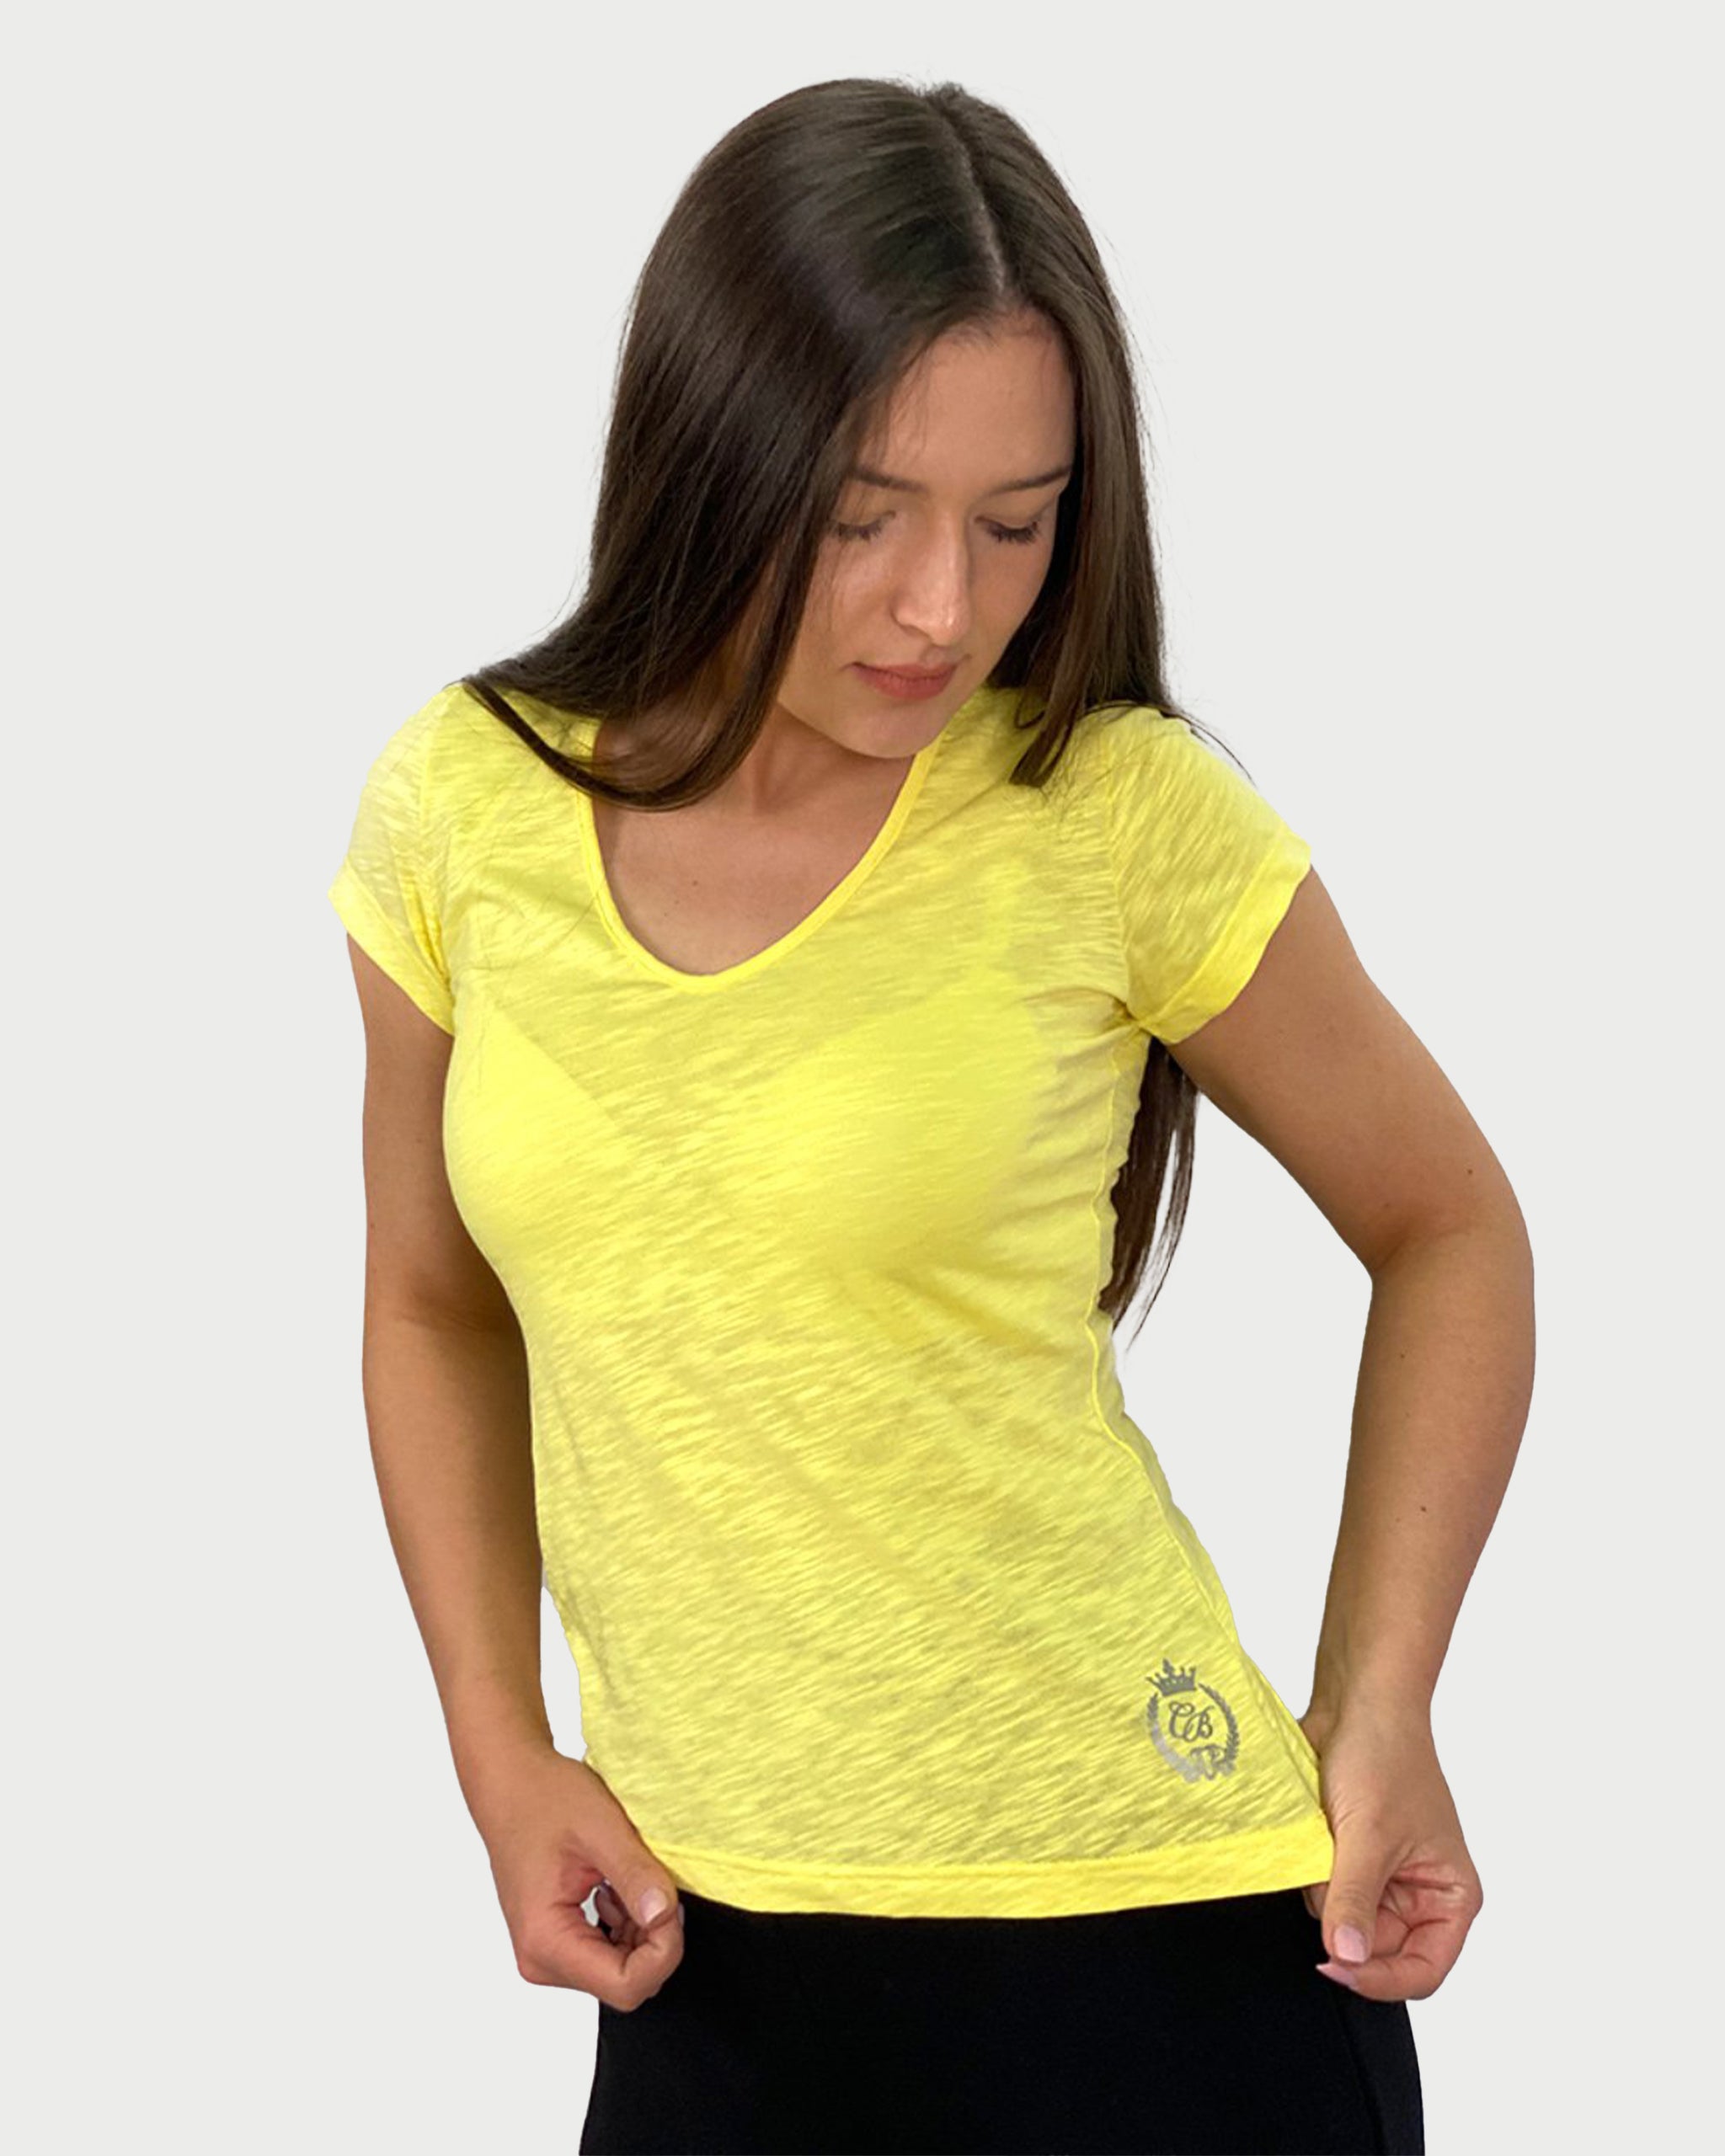 YELLOW SENSATION - tricou minimalist pentru femei